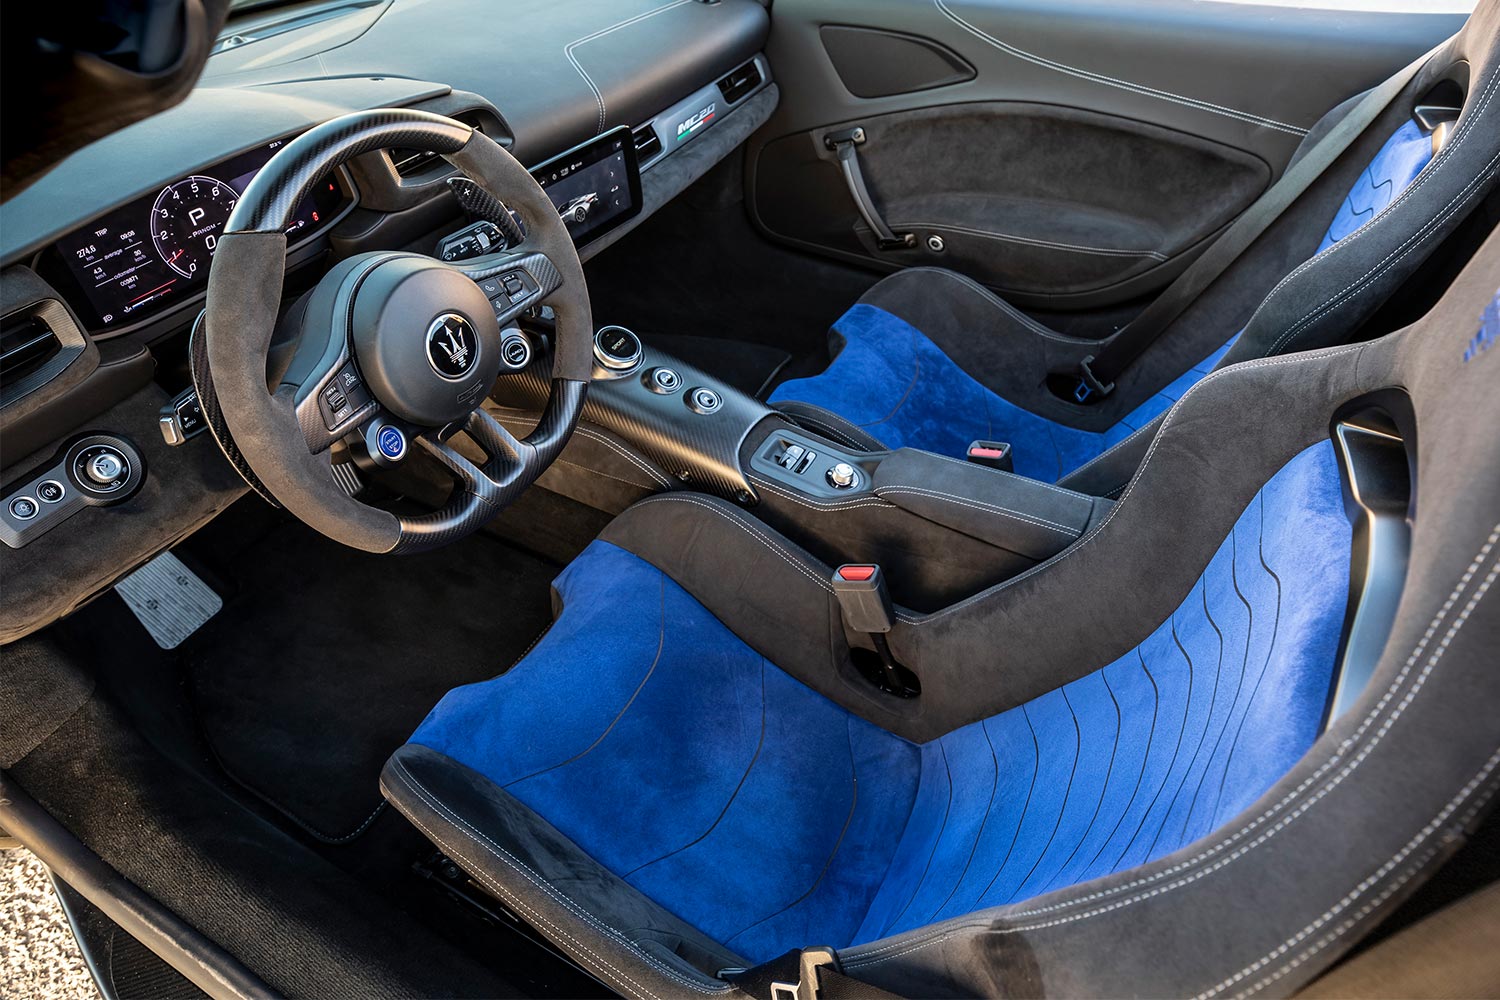 The blue and black seats inside the Maserati MC20 Cielo